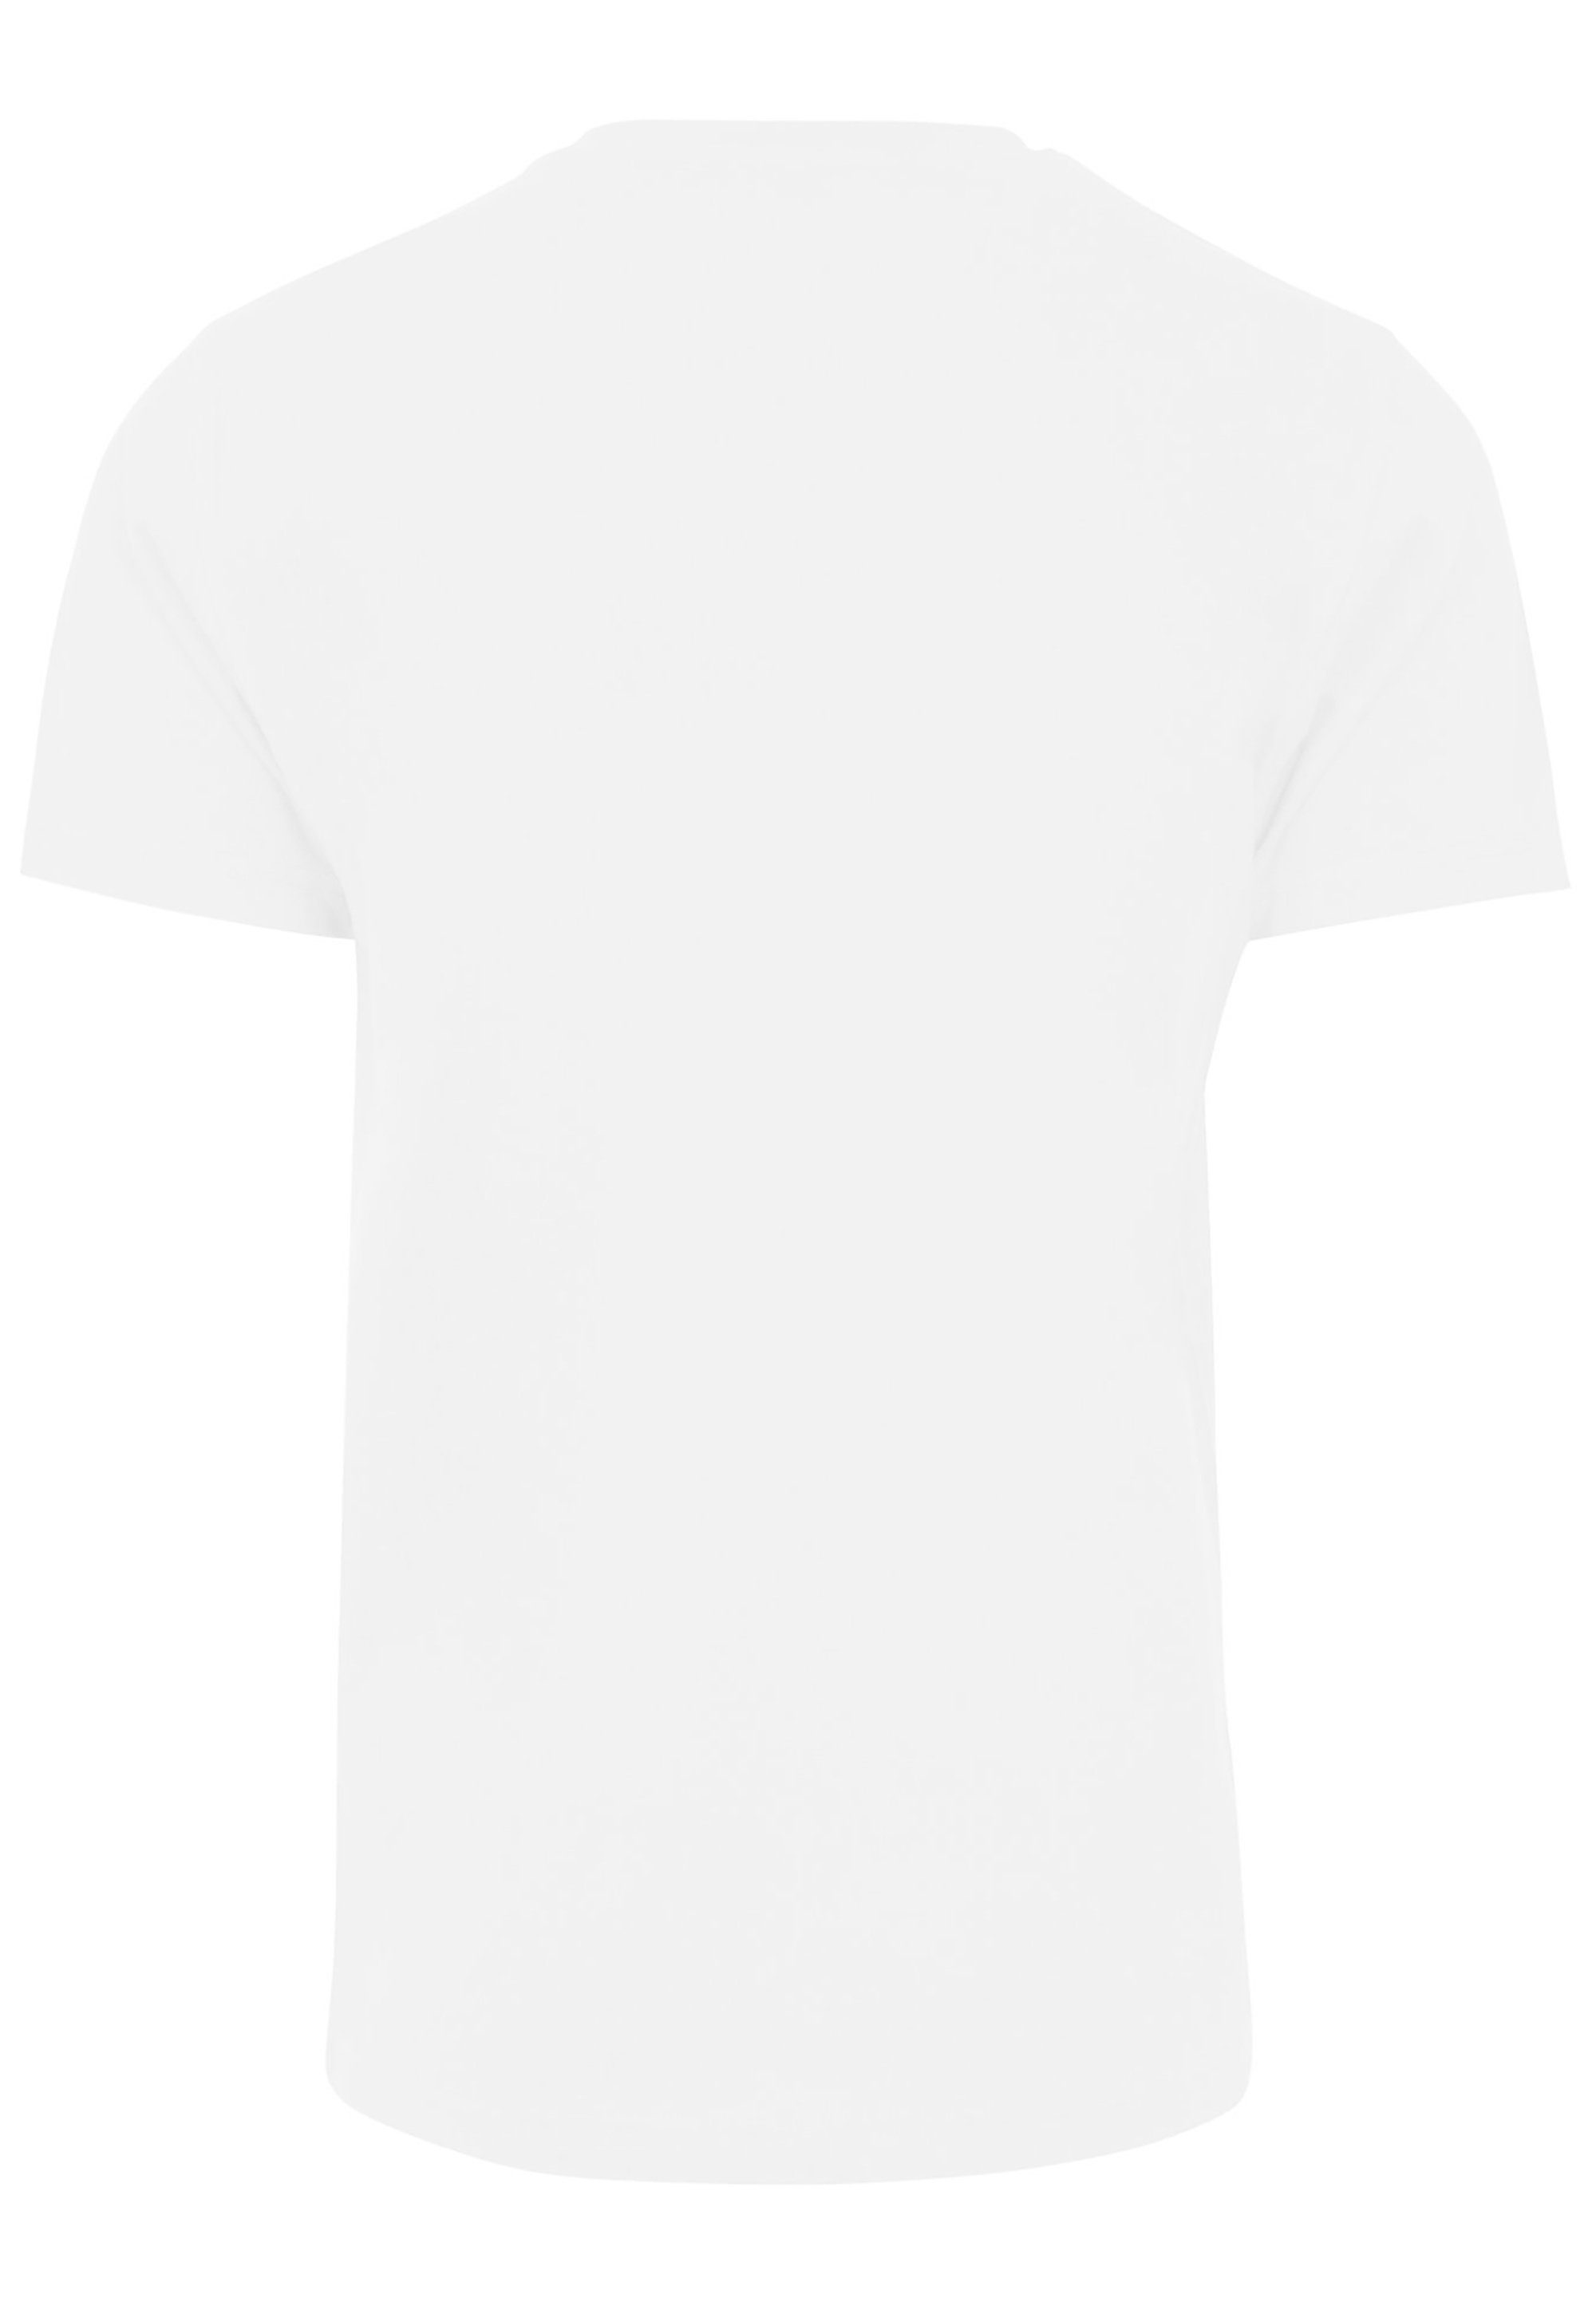 F4NT4STIC T-Shirt Marvel Logo Waschsymbole weiß Print